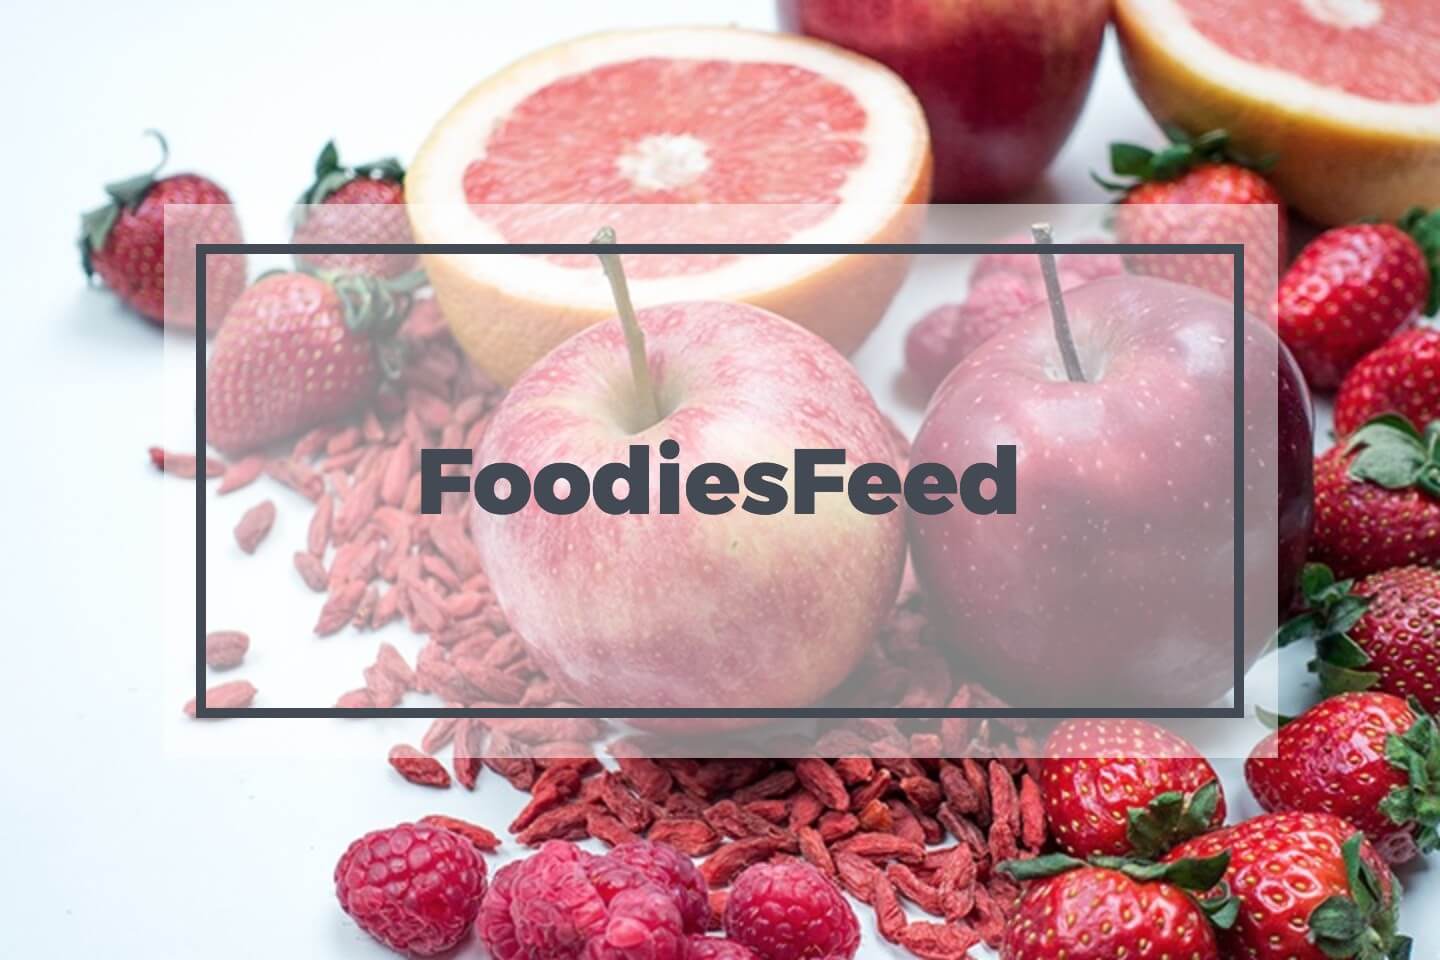 Foodies feed free stock photos